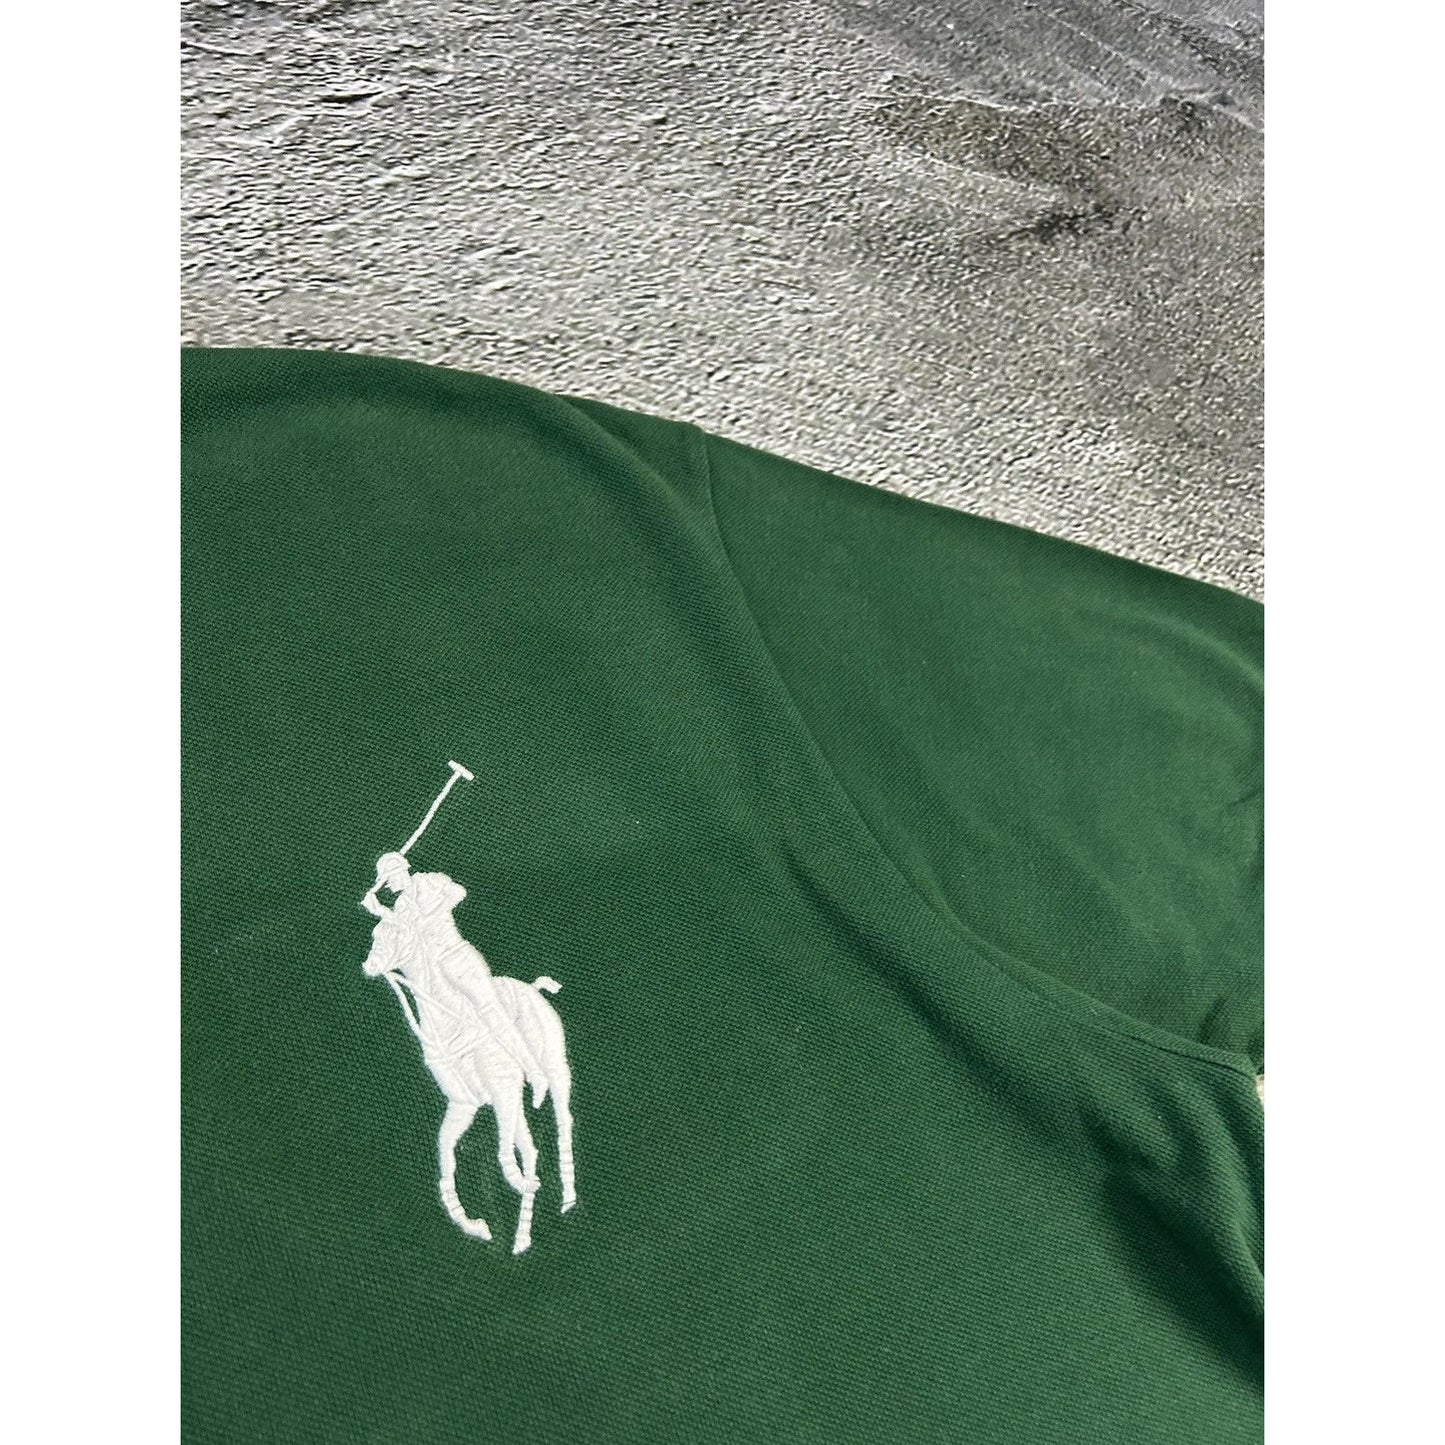 Chief Keef Polo Ralph Lauren vintage green big pony